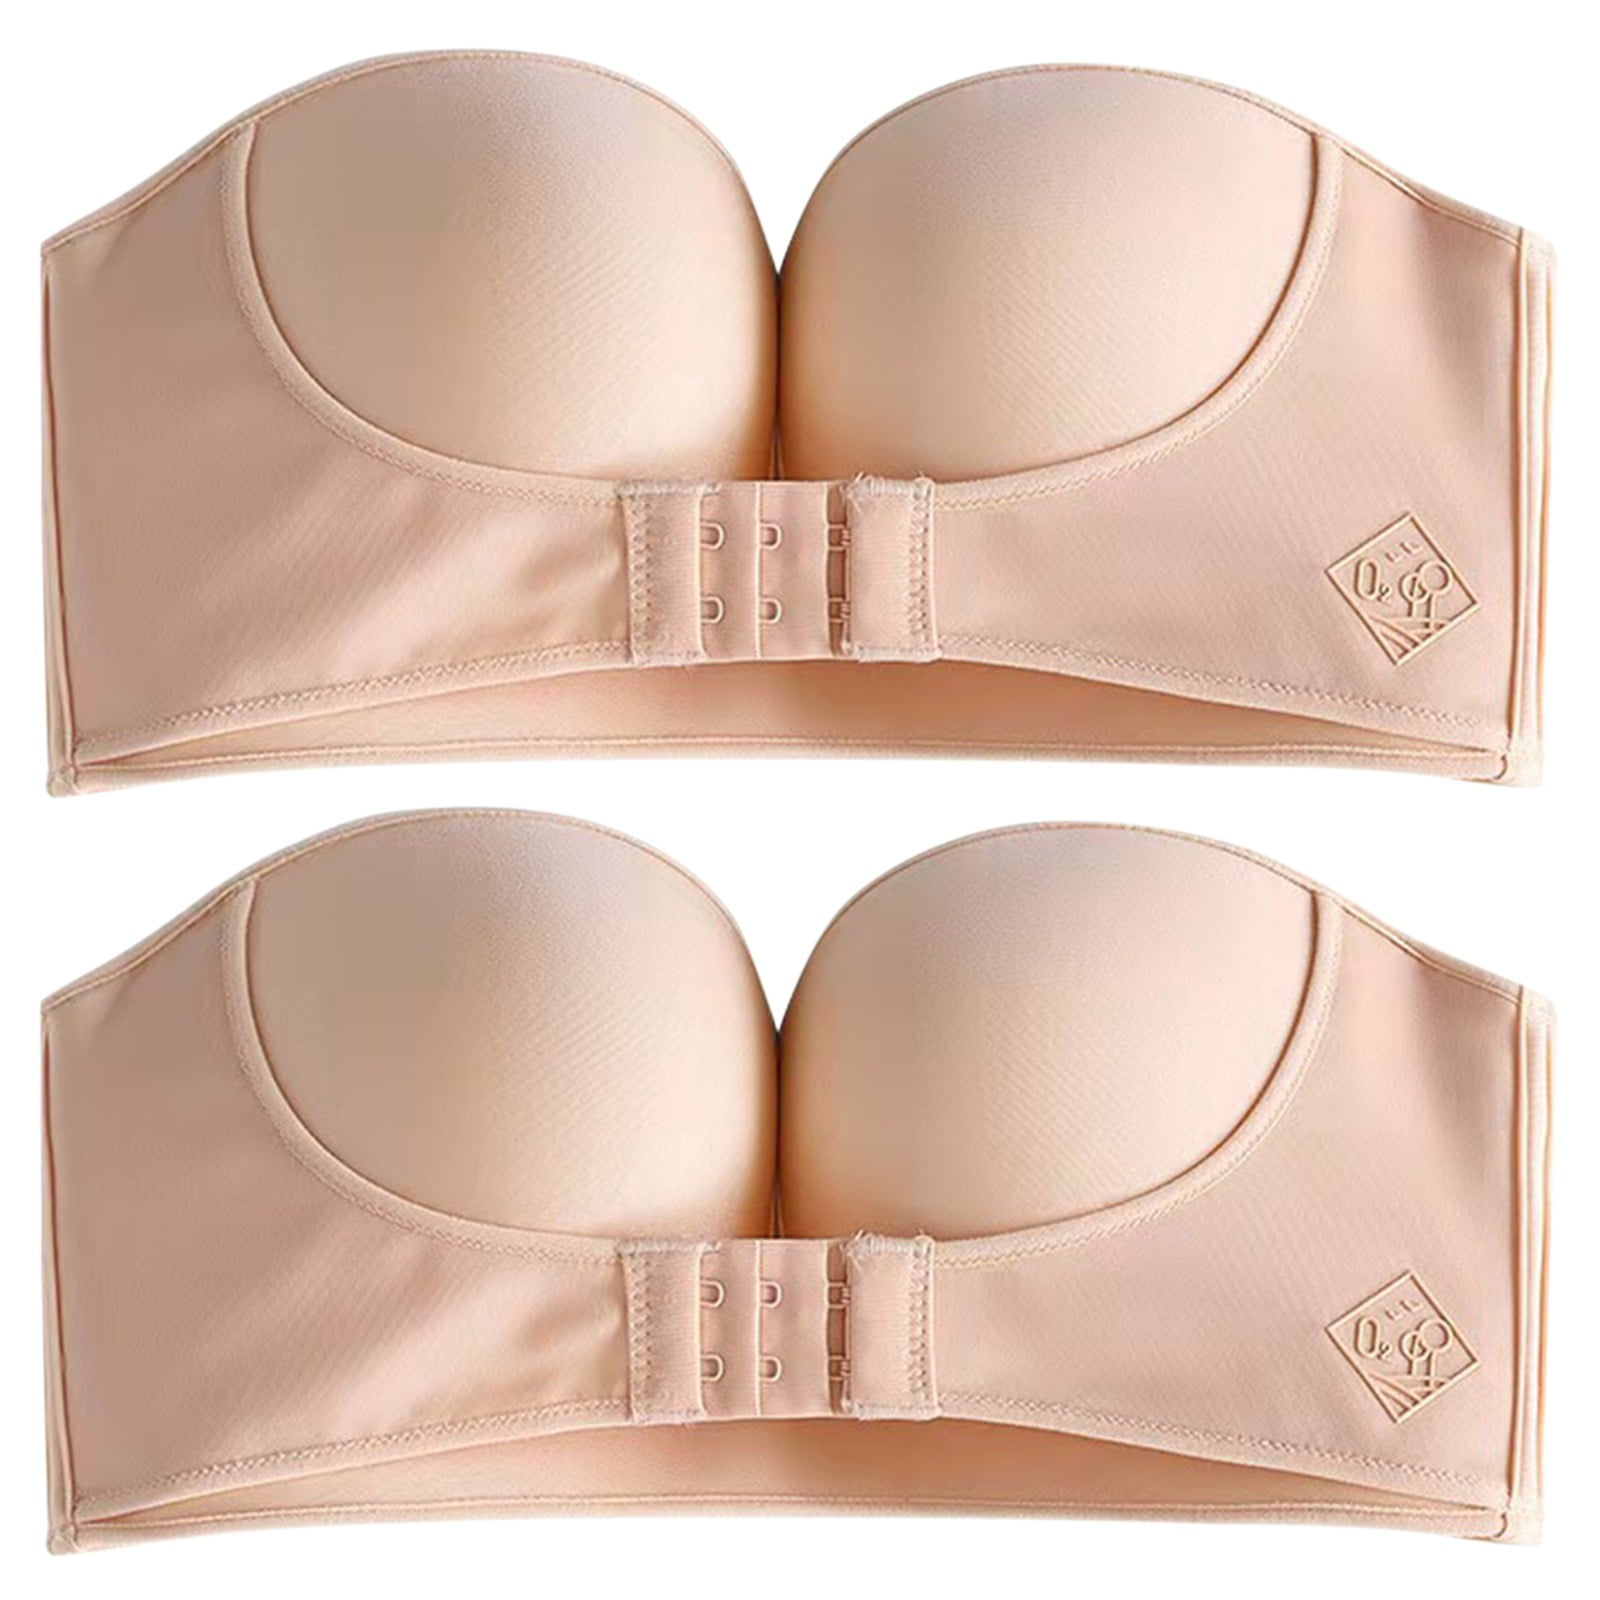 Frehsky bras for women 3PC Women Vest Have A Chest Pad Wearing Sports  Underwear bras for women no underwire J